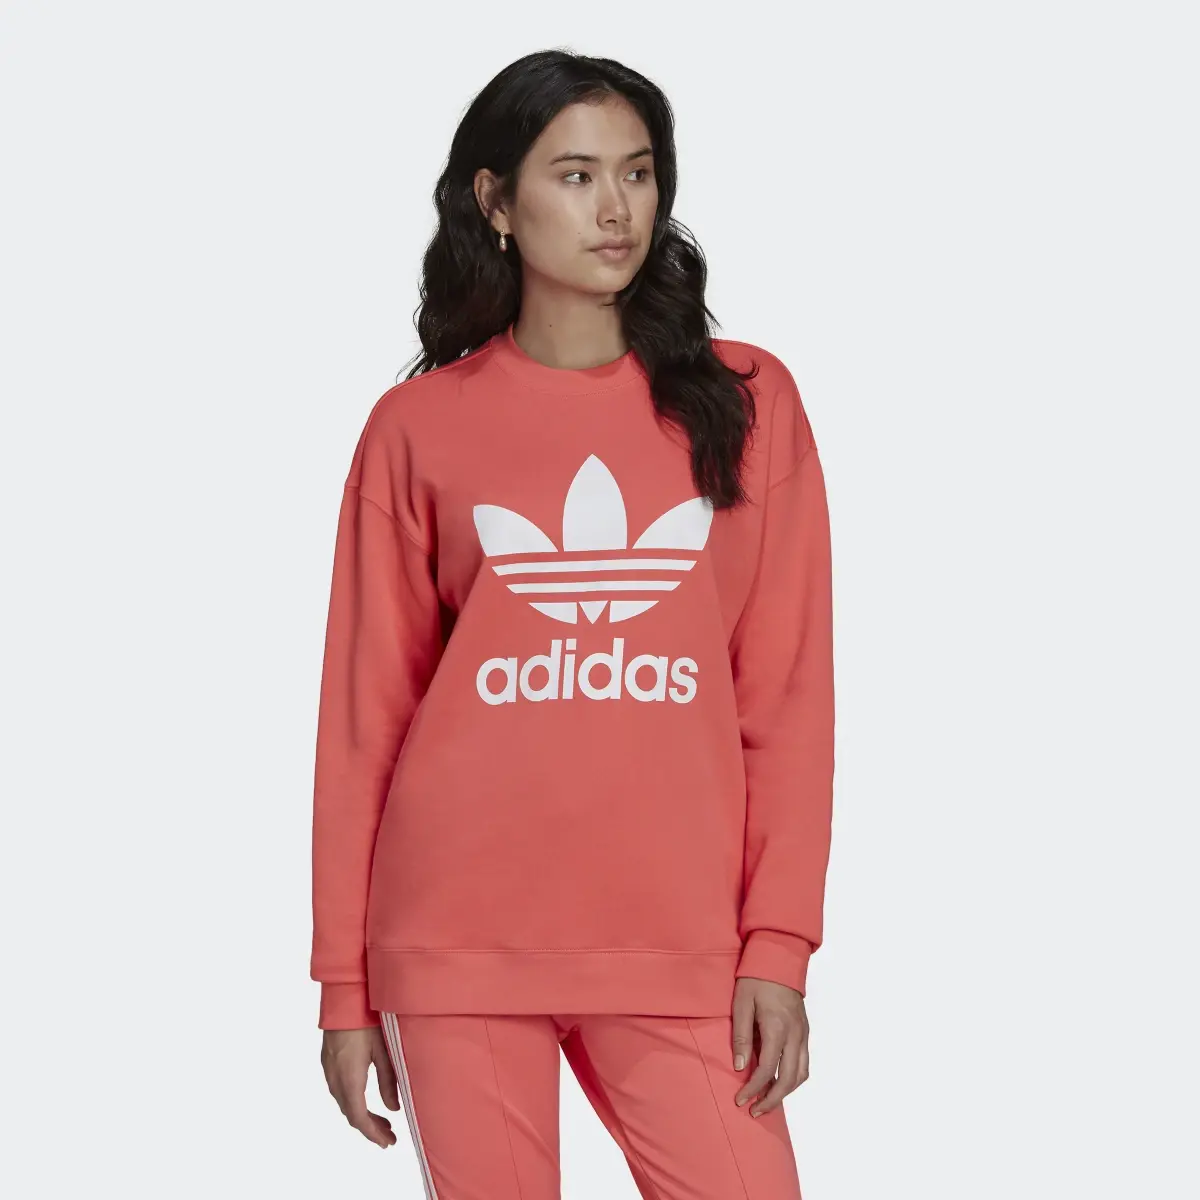 Adidas Trefoil Crew Sweatshirt. 2